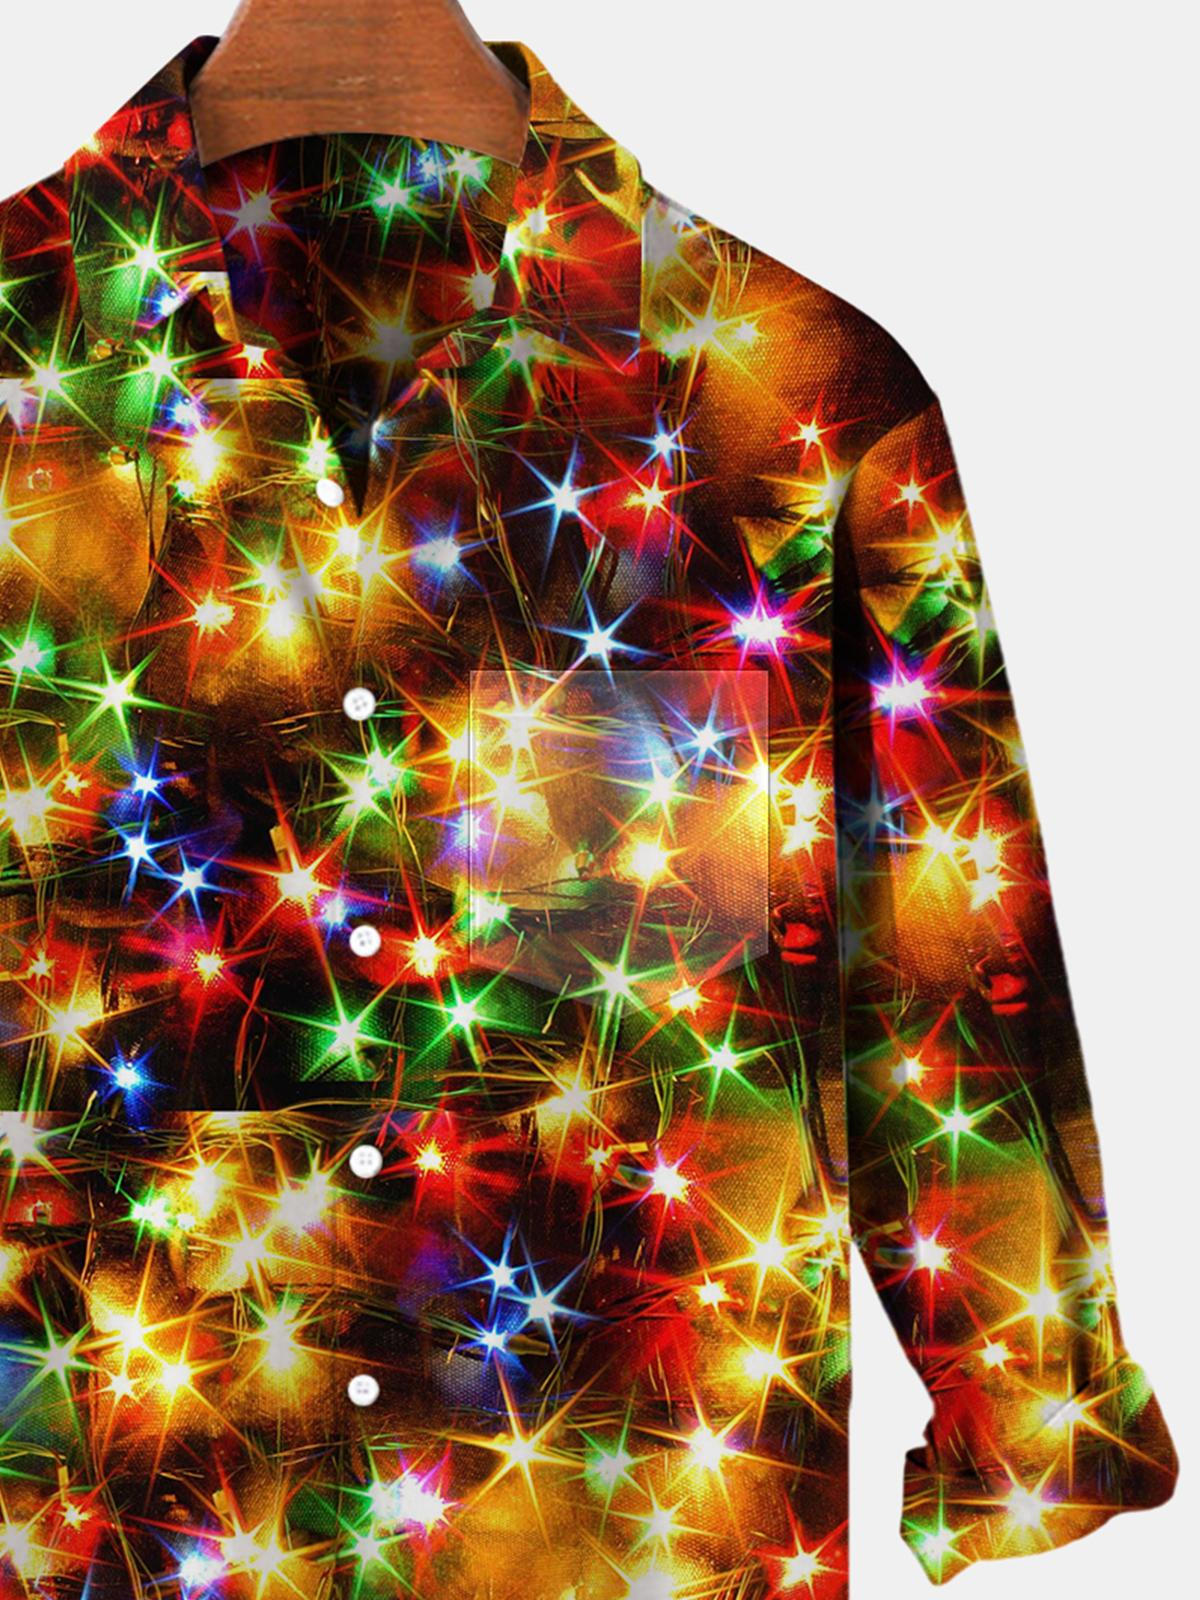 Christmas Light Long Sleeve Men's Shirts With Pocket